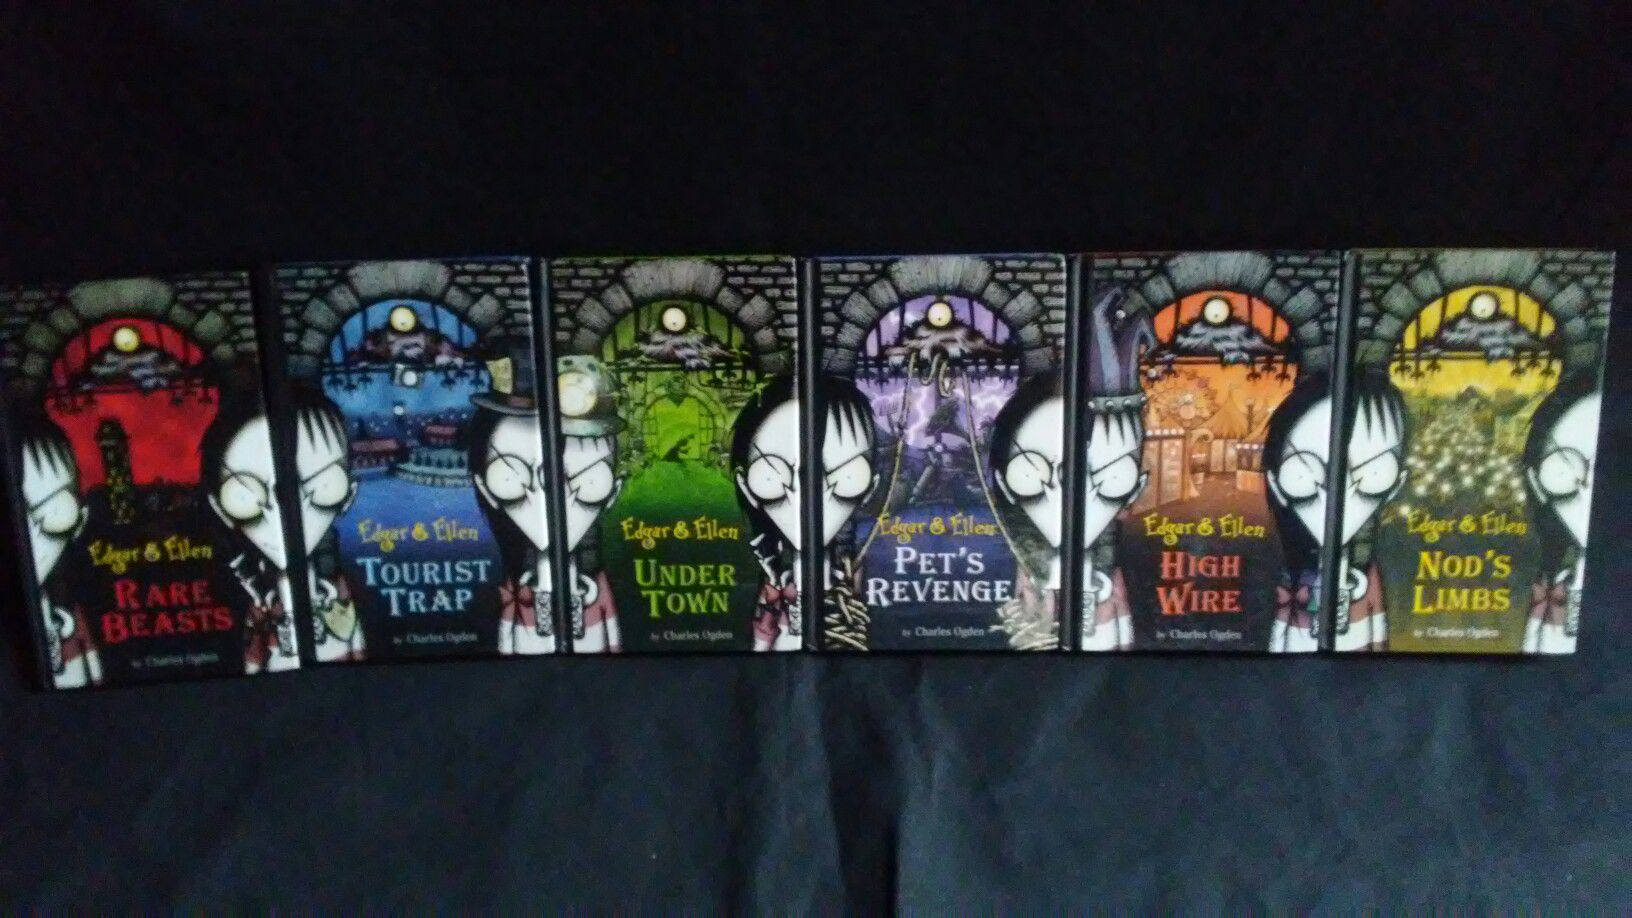 Set of 6 Edgar and Ellen Halloween themed books (complete set)